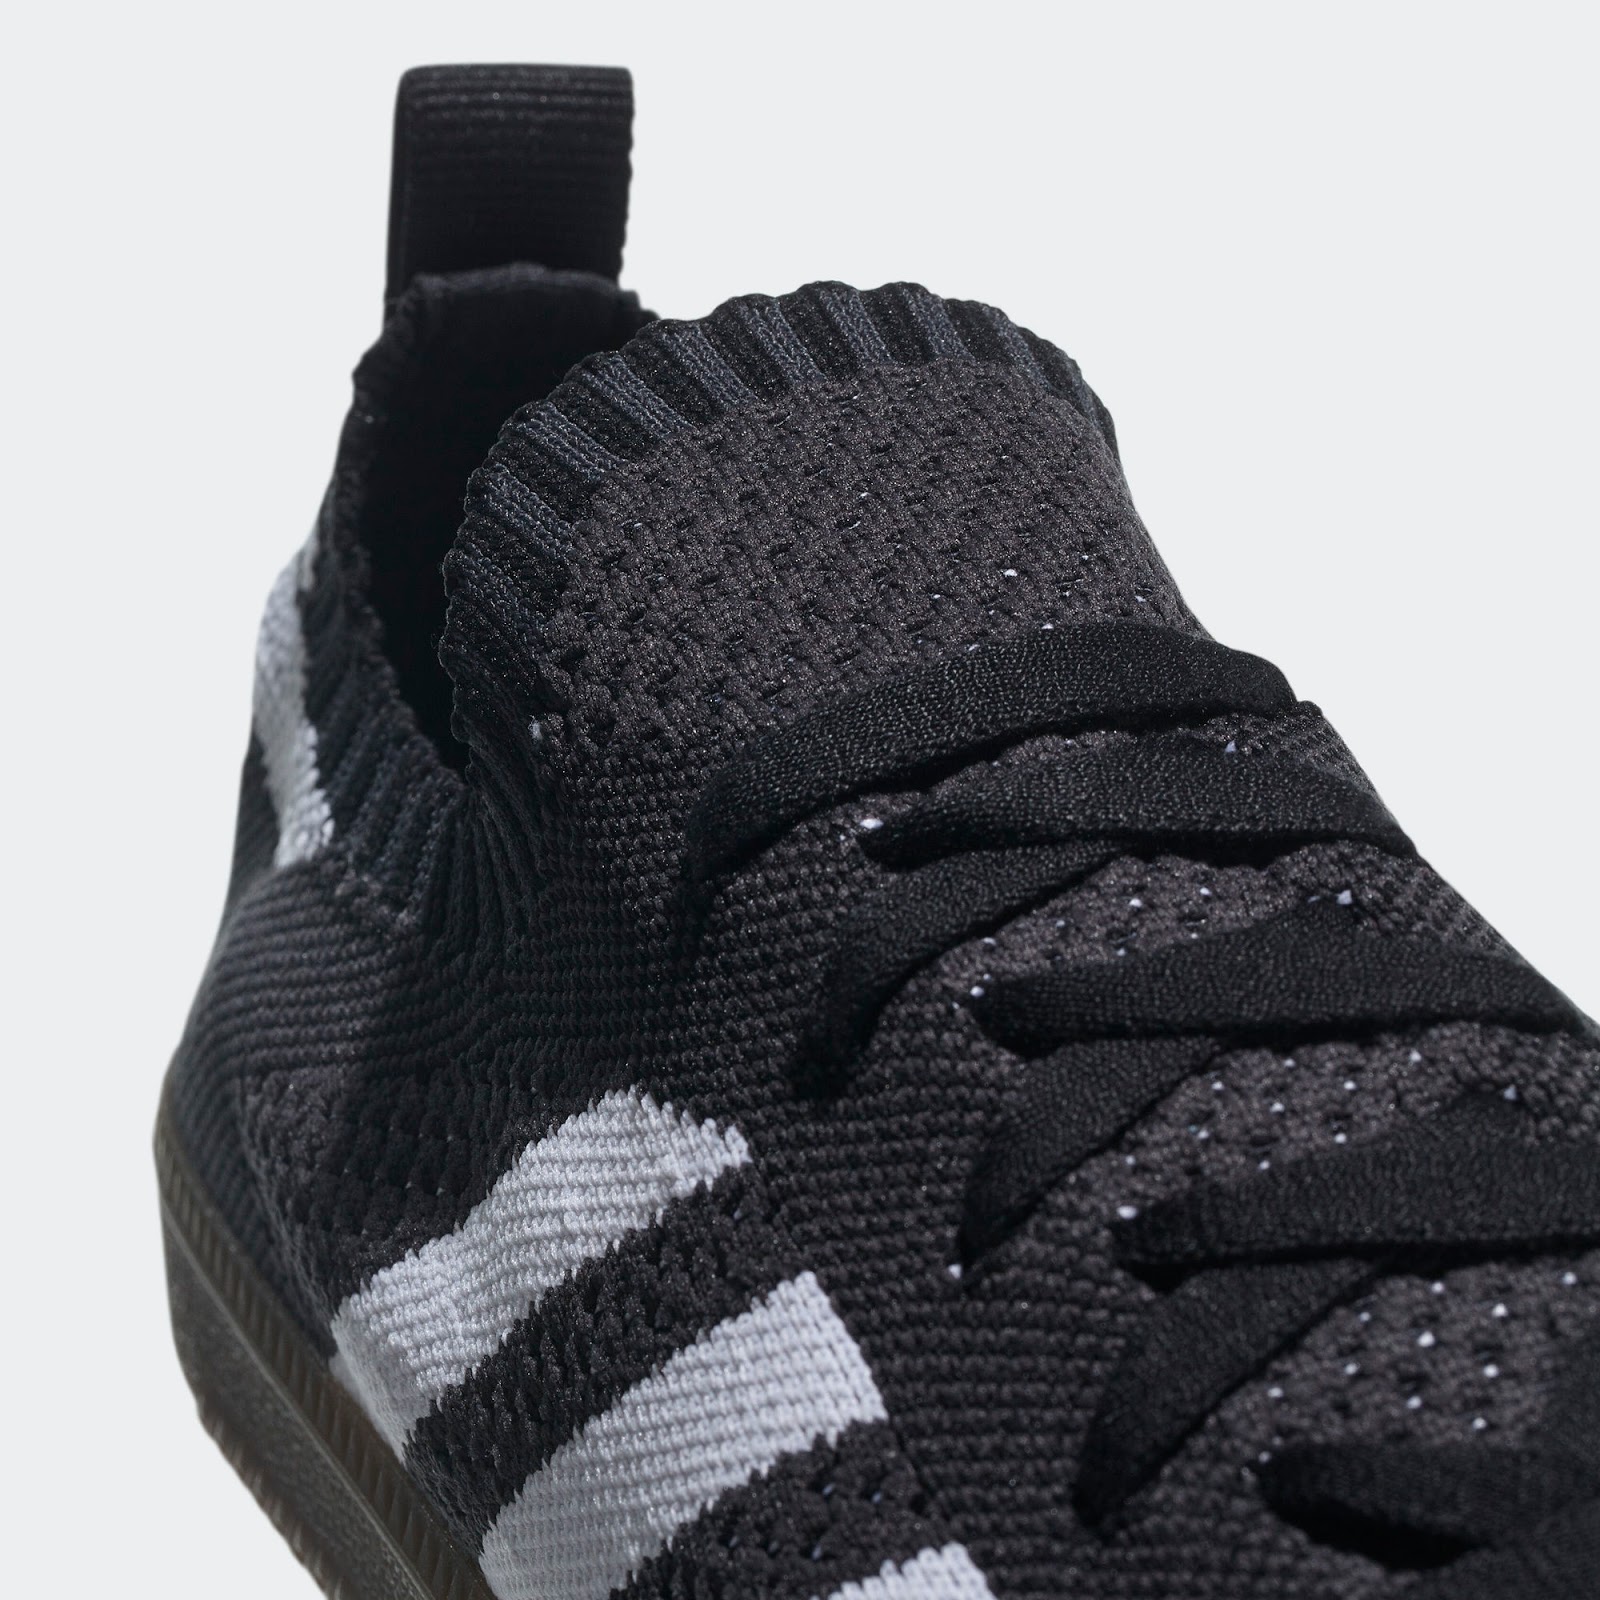 Knitted Adidas Samba Primeknit Boots Released - Footy Headlines